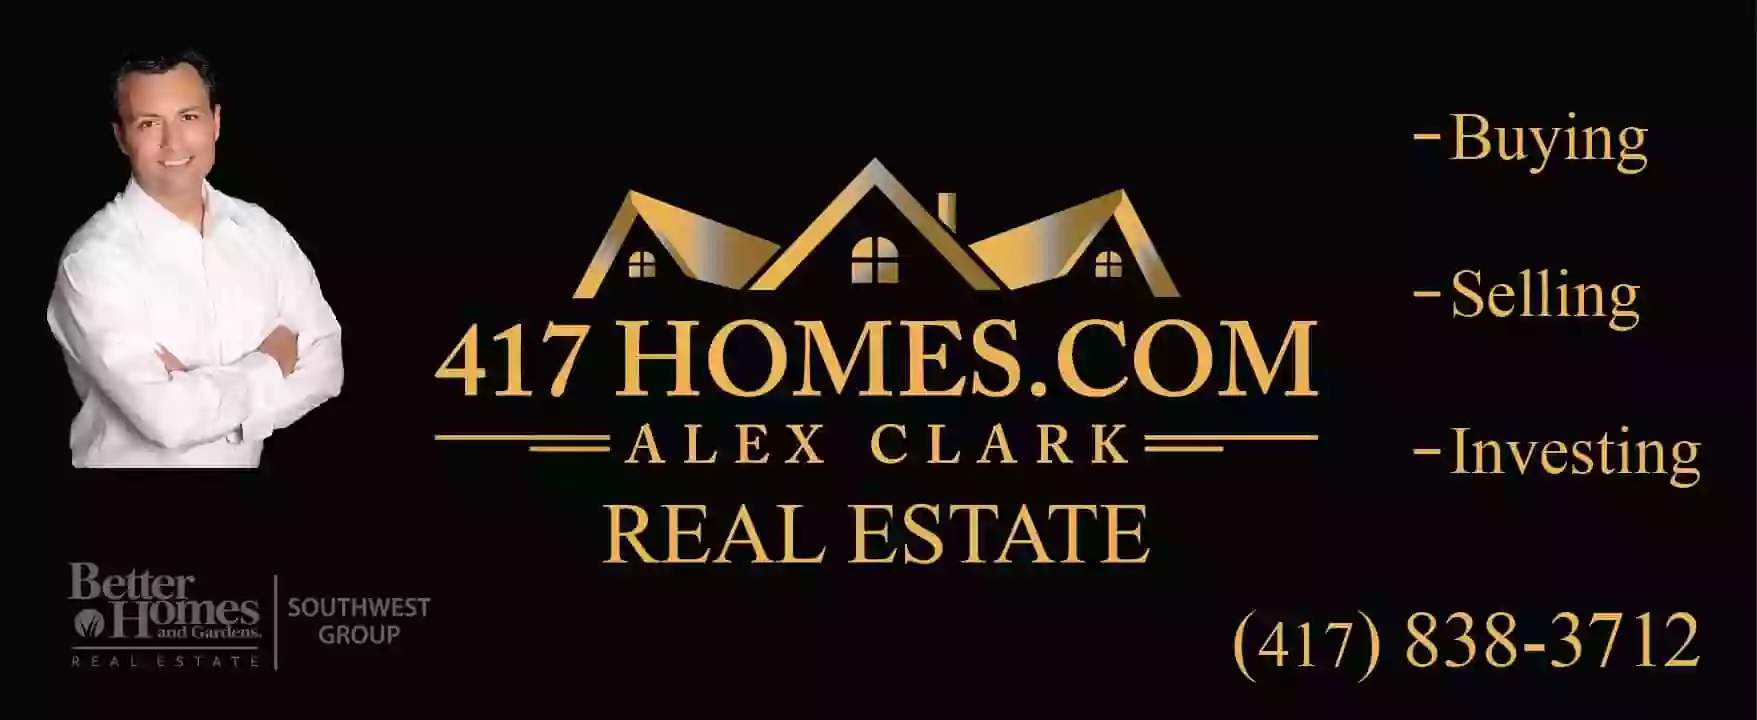 417Homes.com Real Estate - Broker Alex Clark